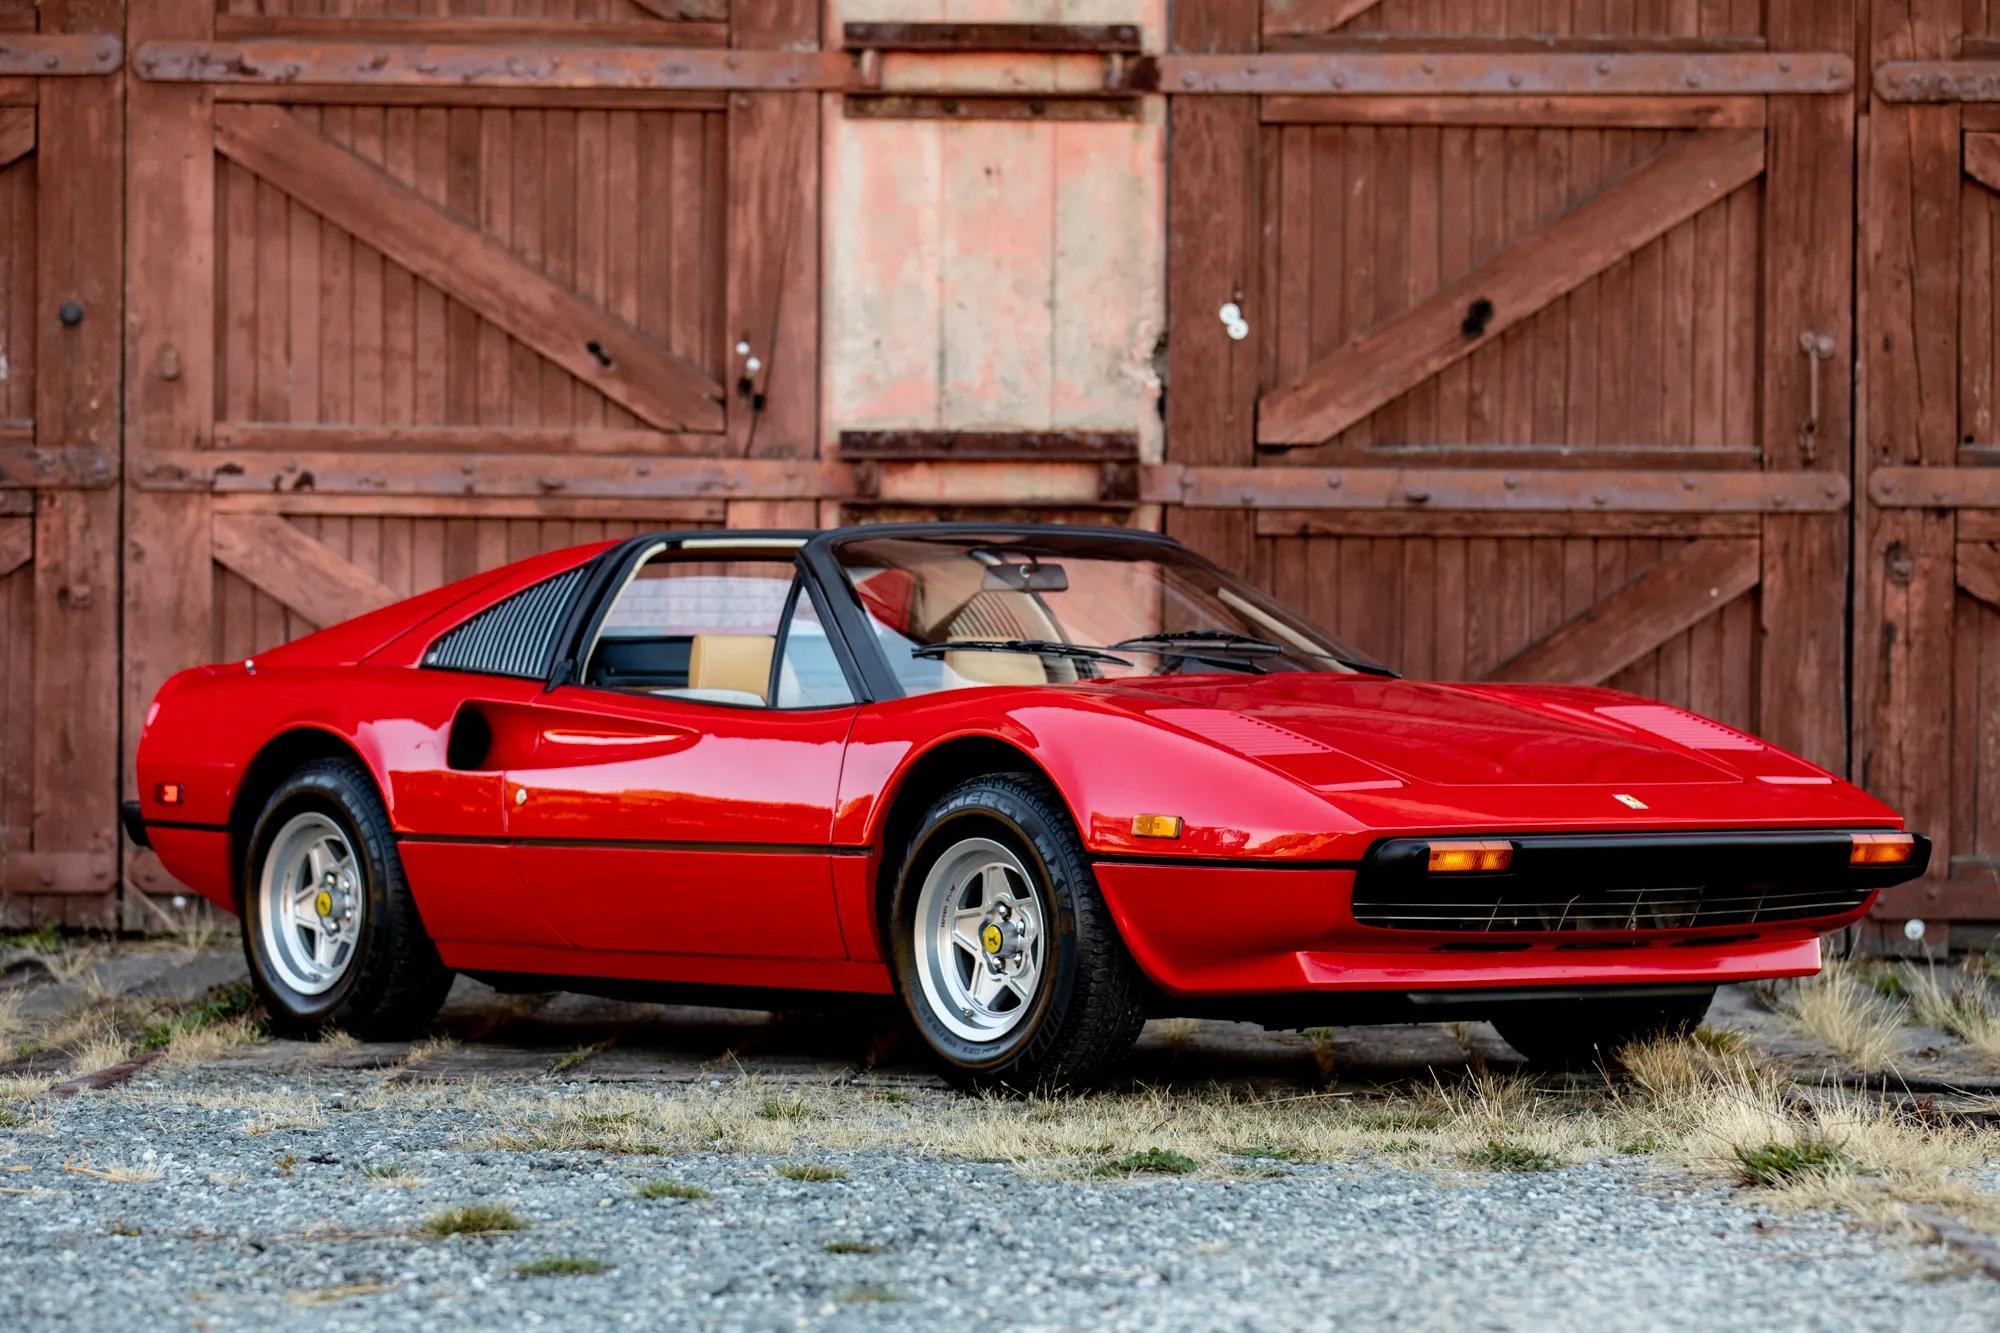 ferrari 308 cost - How much is a 1983 Ferrari 308 worth